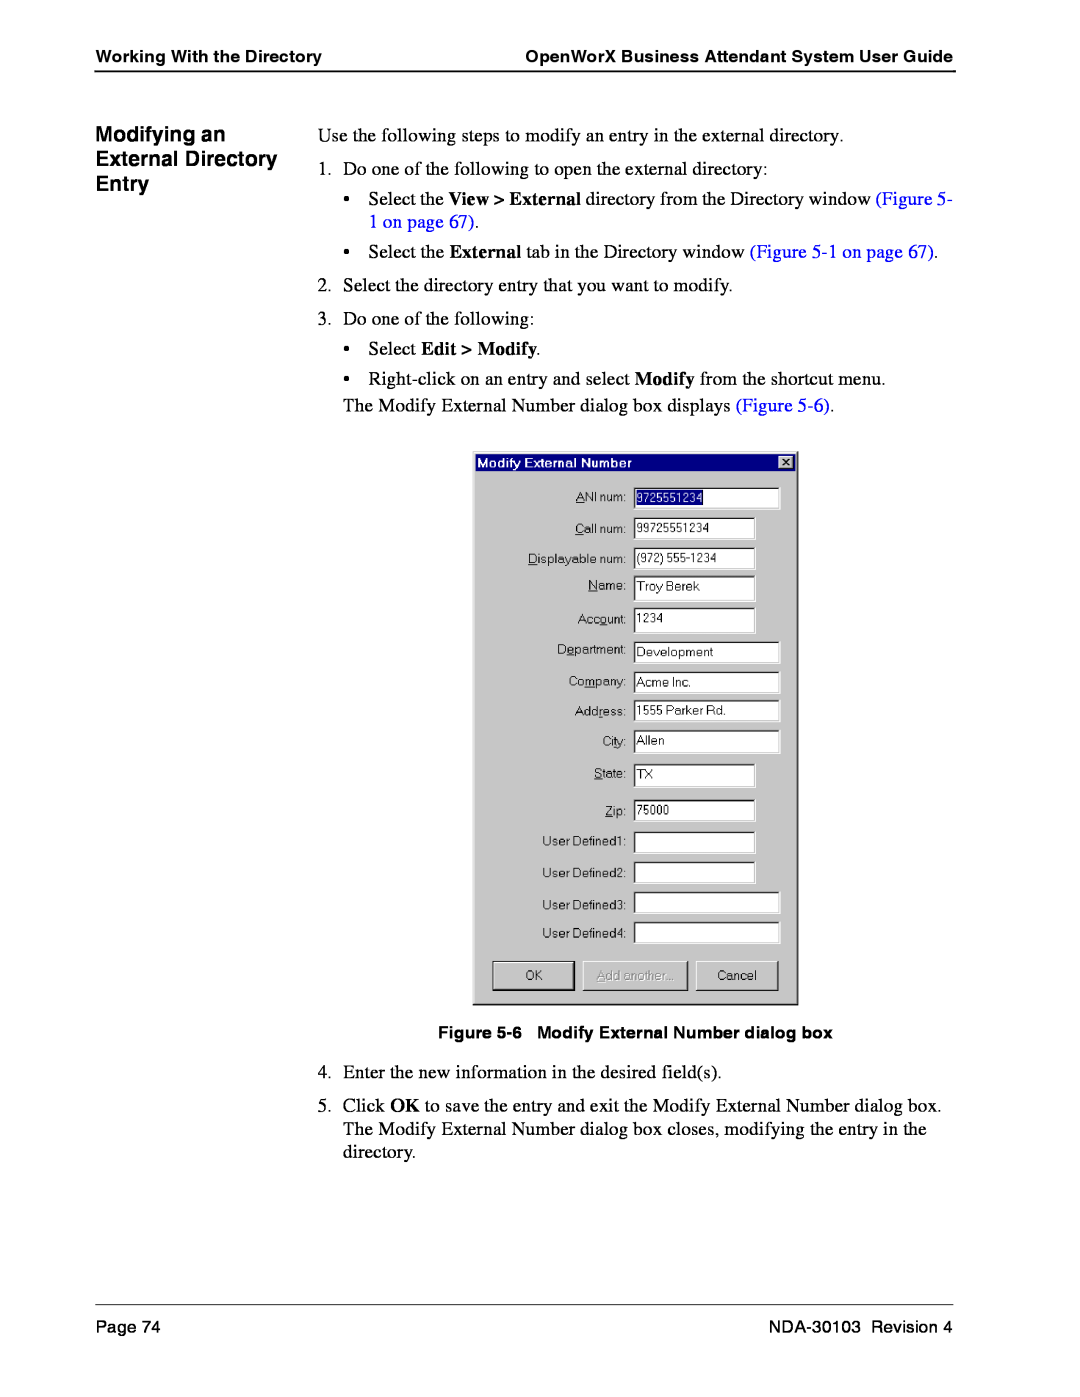 NEC NDA-30103-004 manual Modifying an External Directory Entry 